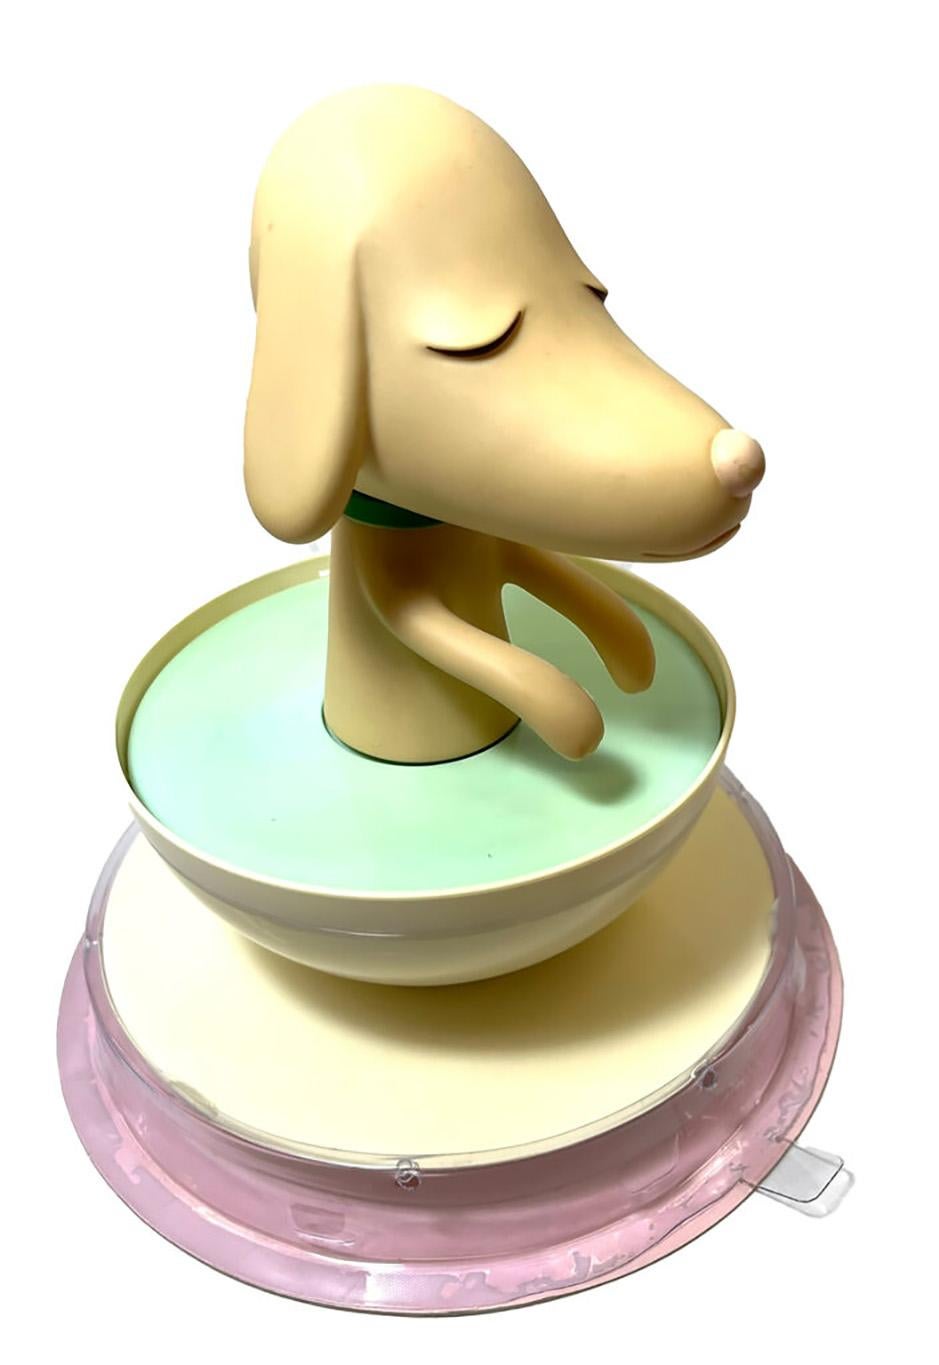 Yoshimoto Pup Cup art toy 2003 (Yoshitomo Nara Pup Cup 2003) For Sale 1